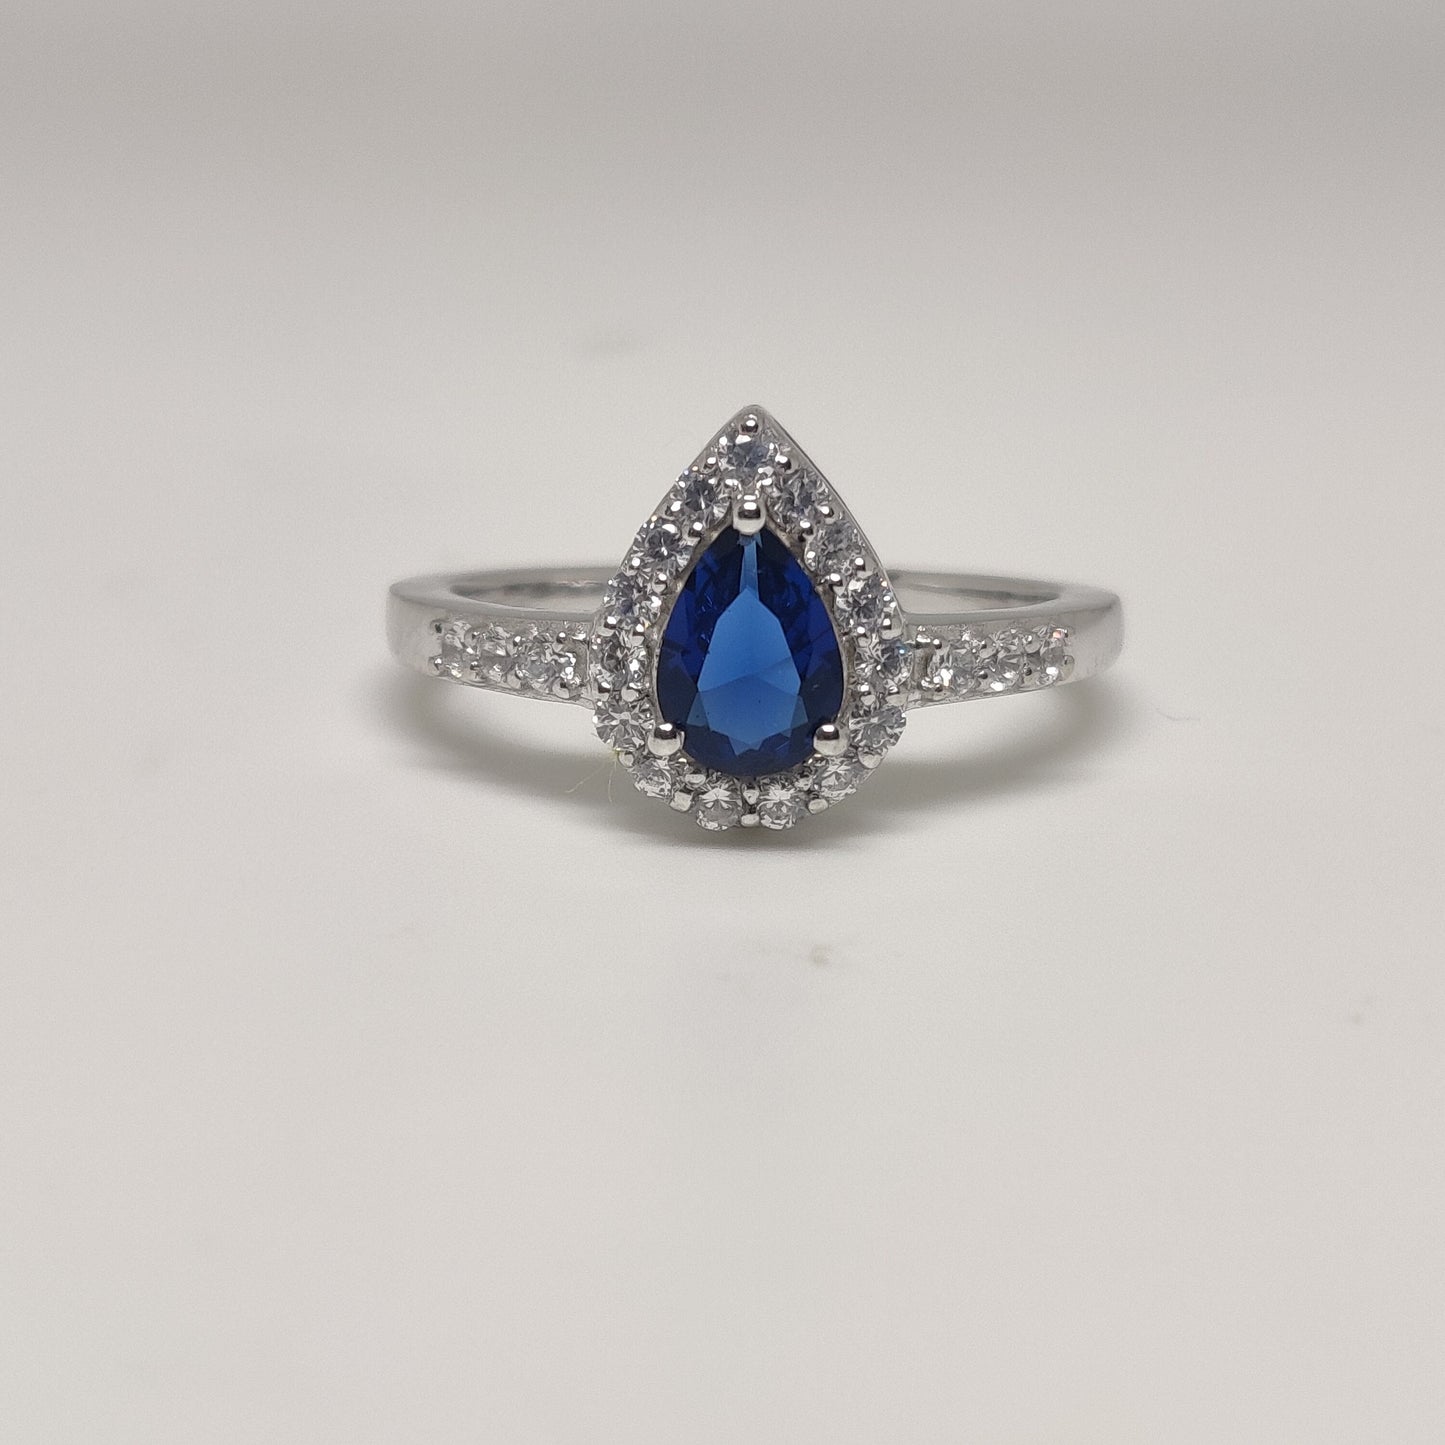 Sapphire Ring, Pear Sapphire Ring, September Birthstone Ring,Blue Handmade Ring, 925 Sterling Silver, 14k White Gold Plated, Gift For Her